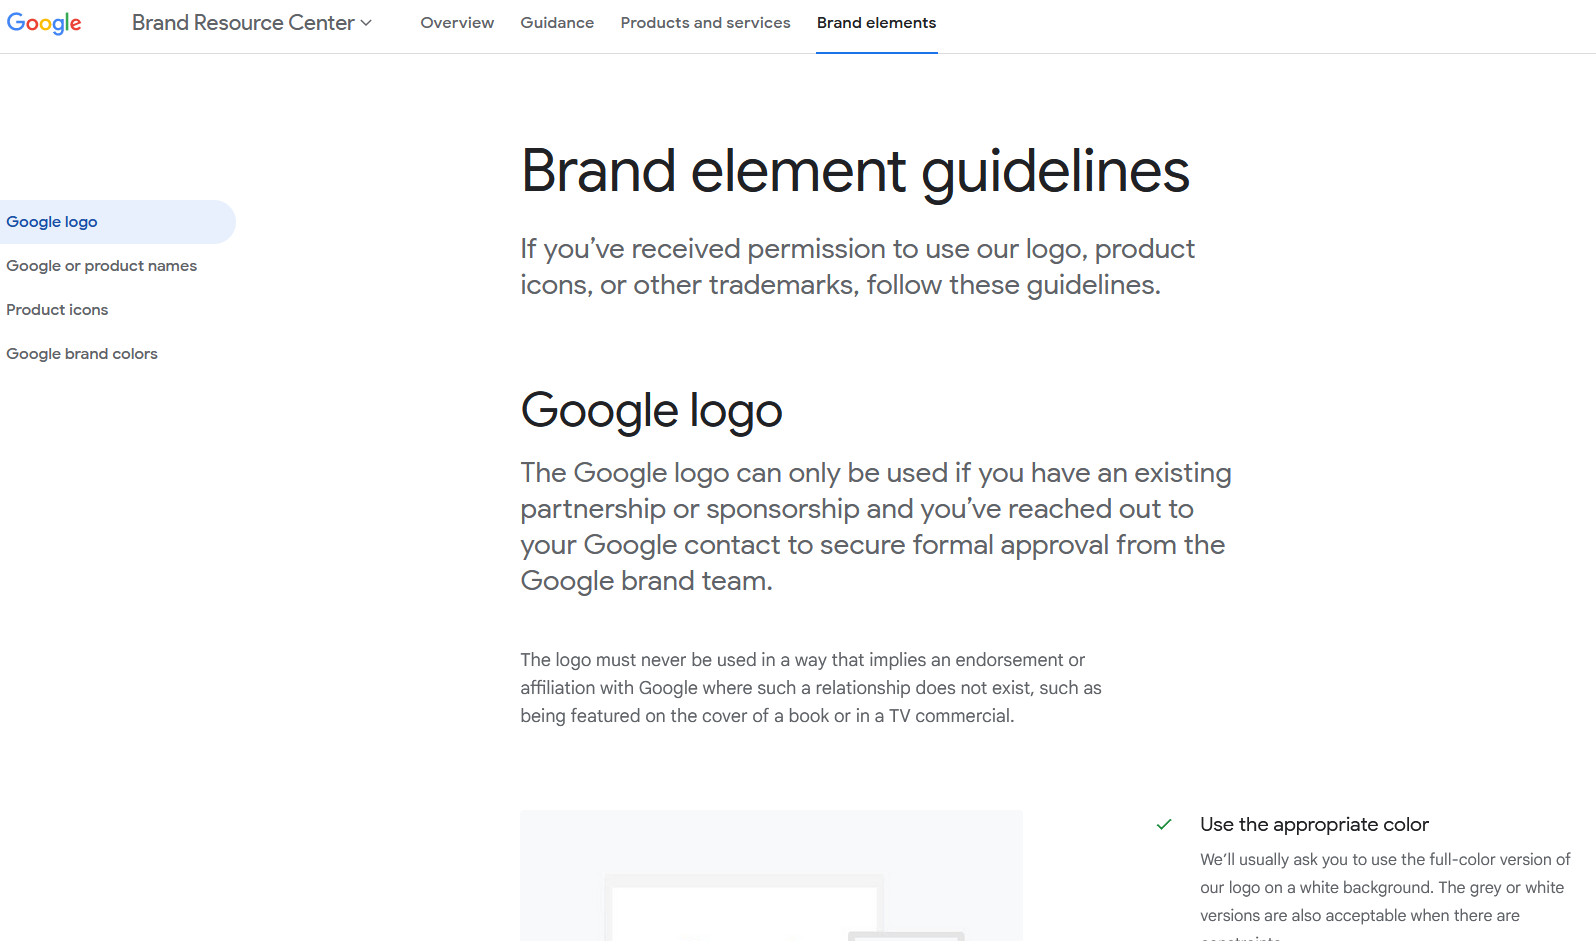 Google's Brand Guide